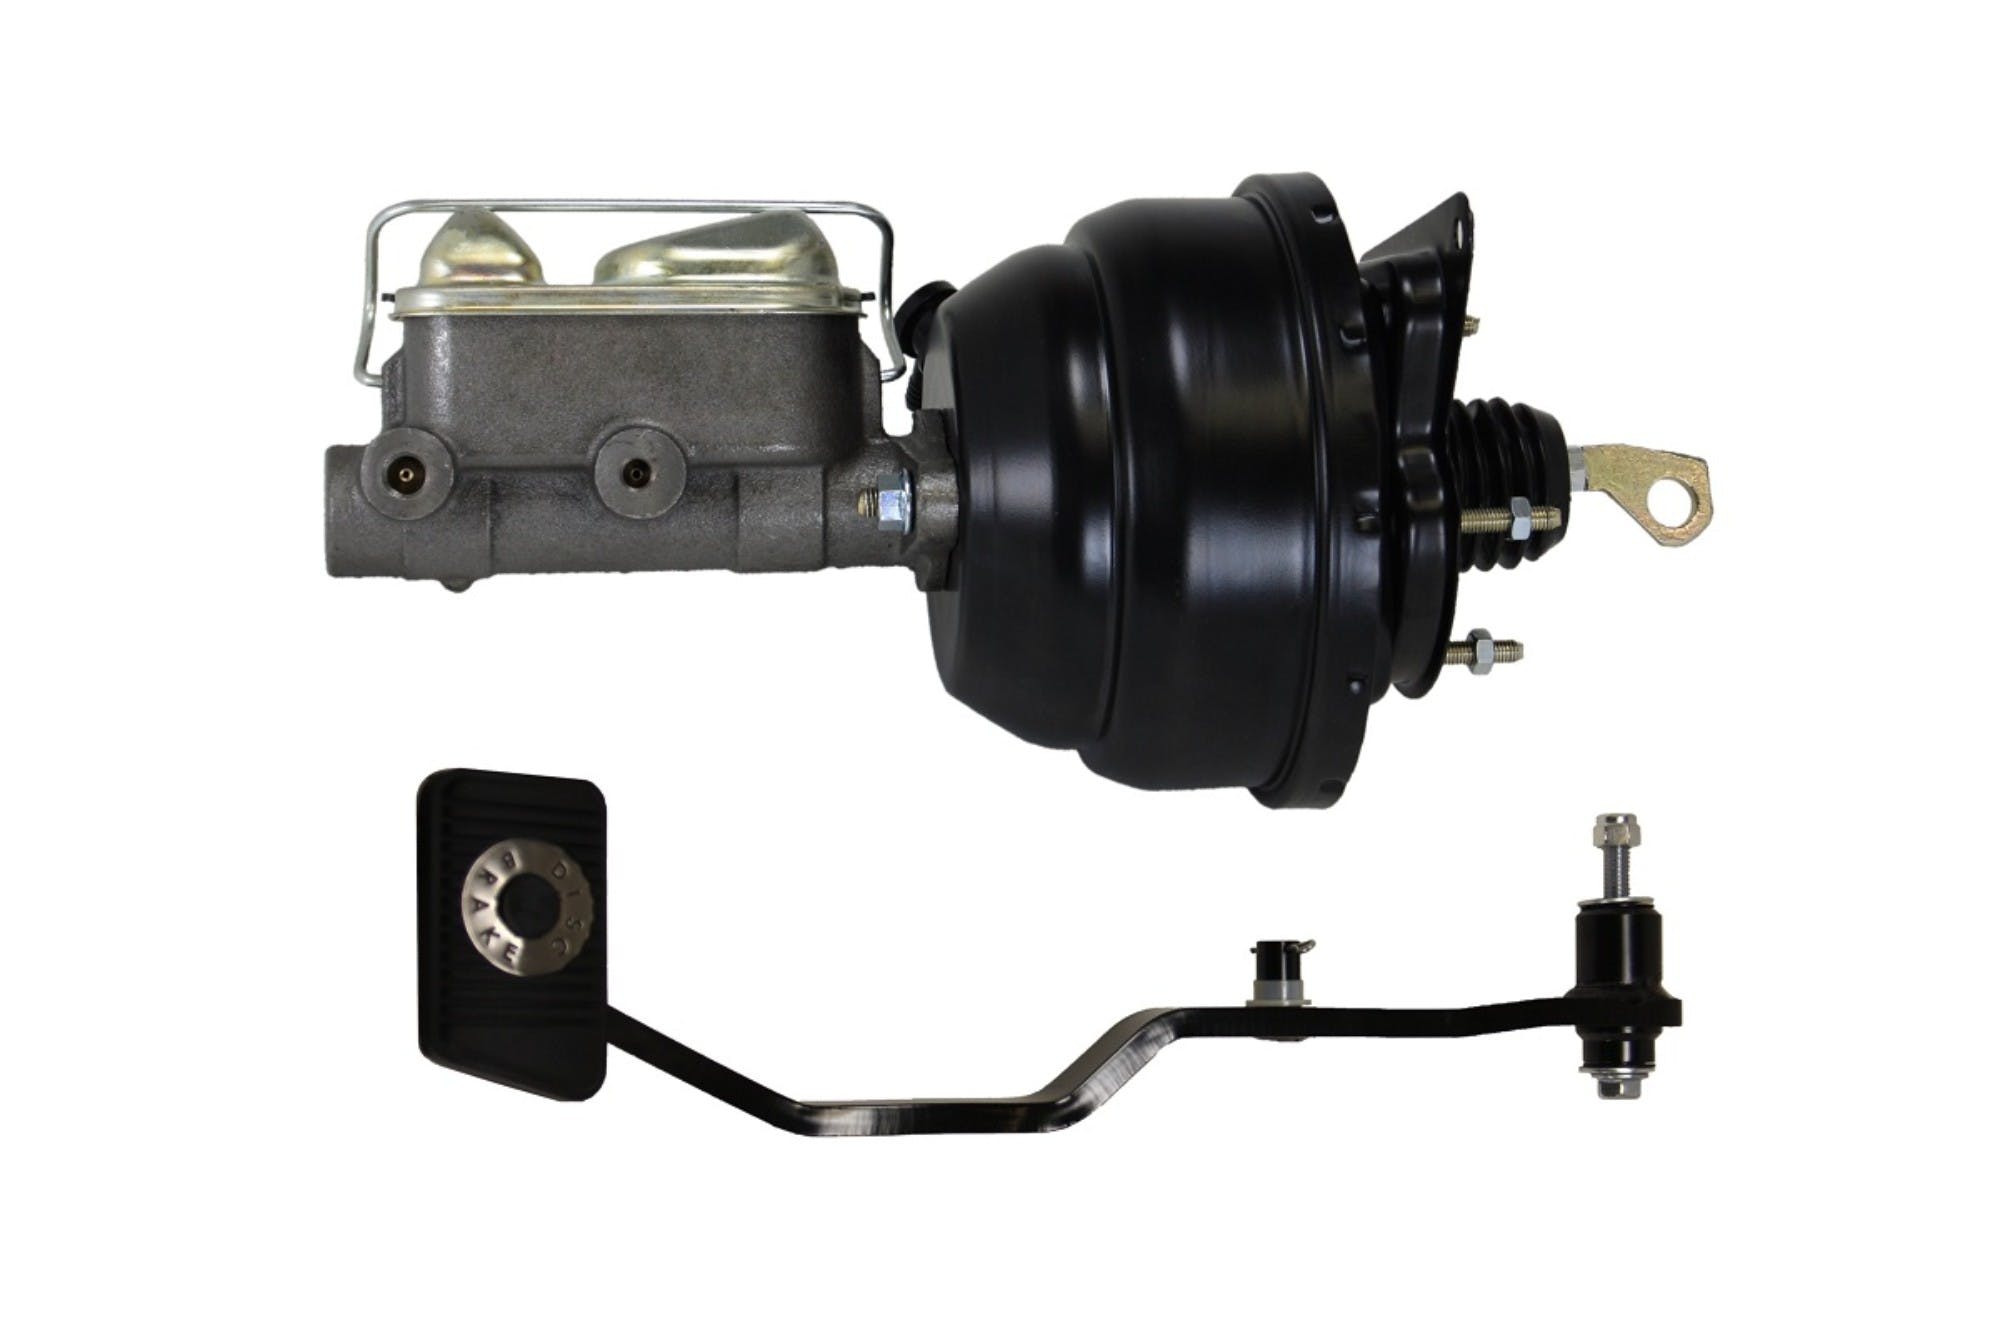 LEED Brakes FC0020HK Hydraulic Kit - Power Brakes - With manual trans